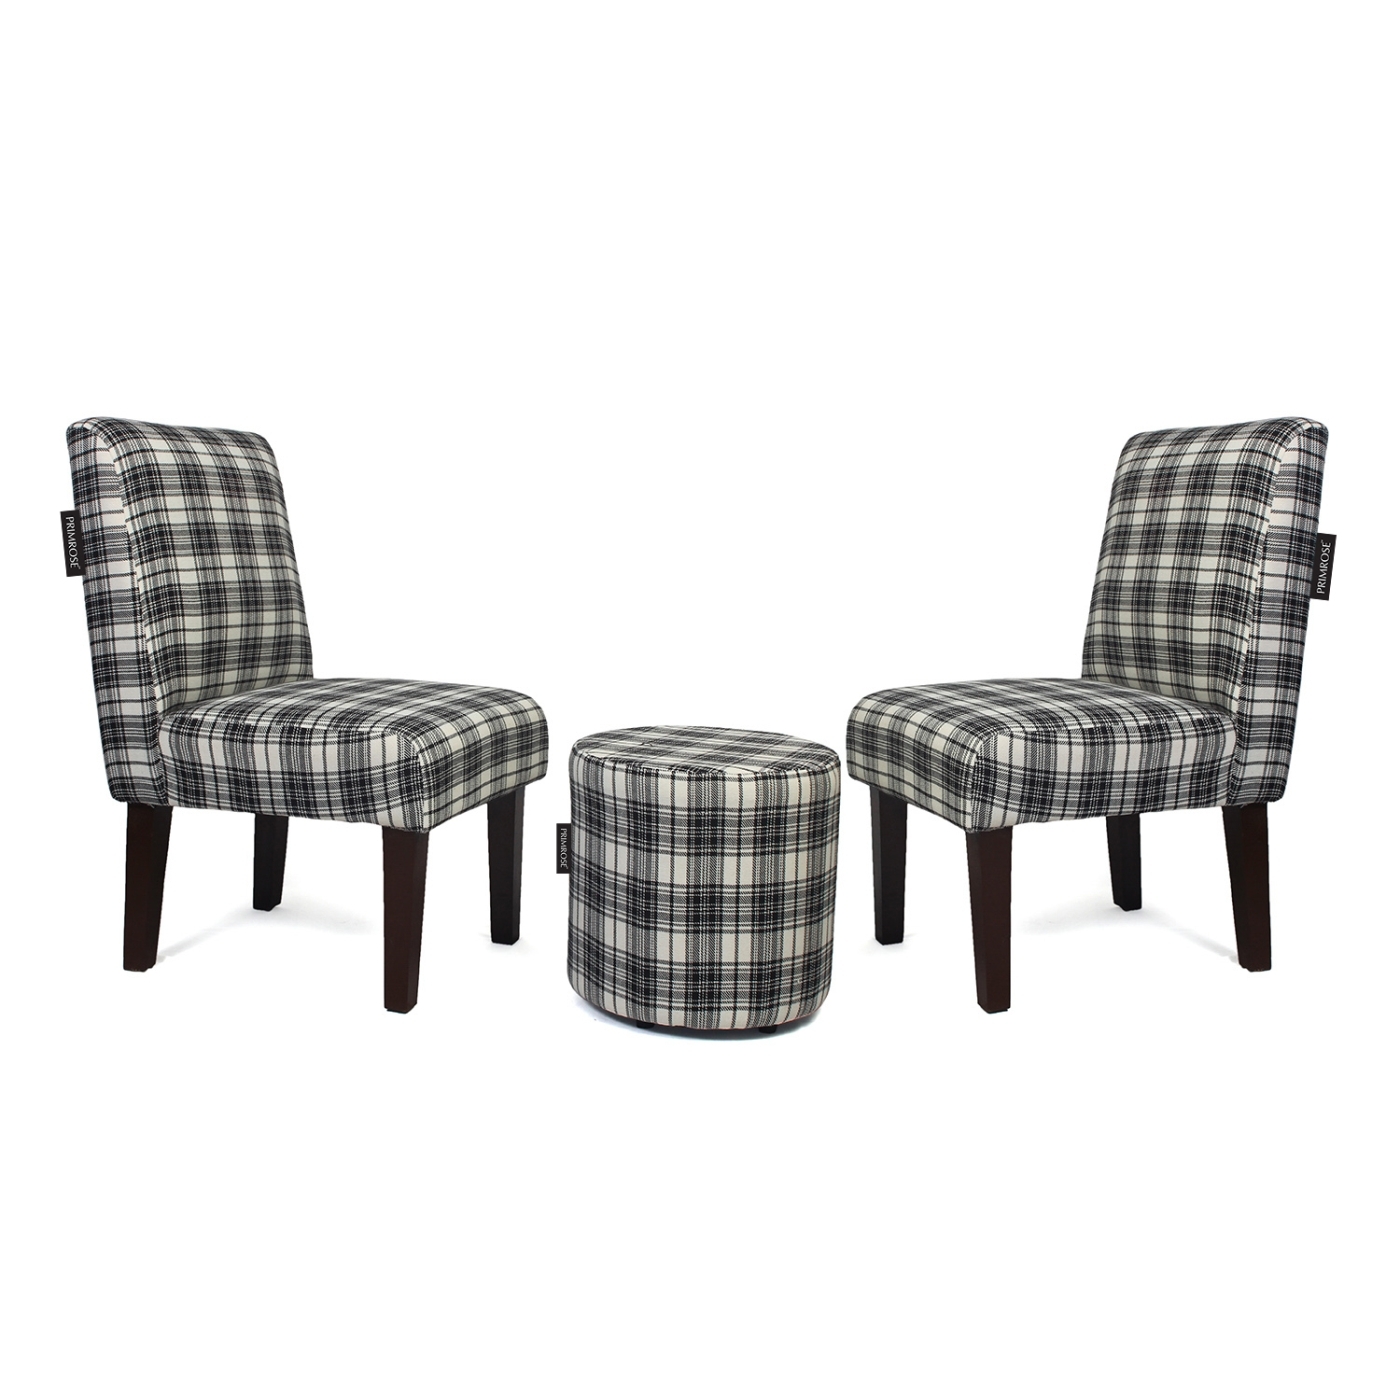 PRIMROSE Betty Premium Cotton Fabric Combo Of 2 Chair And 1 Ottoman - Black And White  